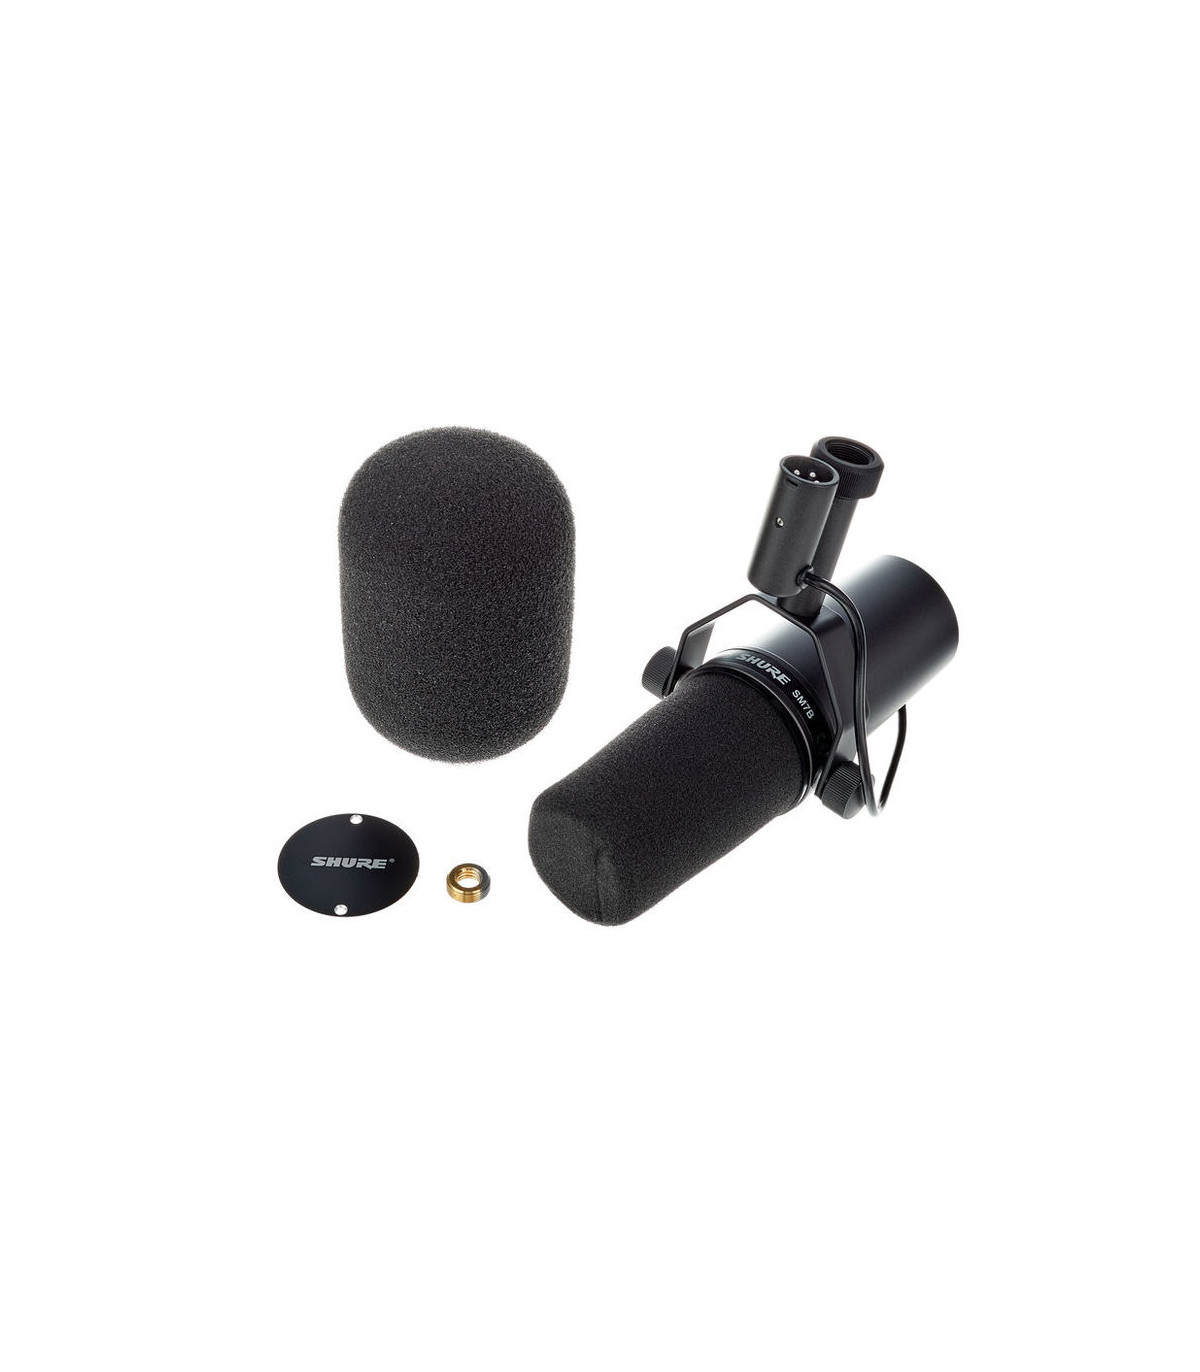 Shure SM7B micrófono dinámico de estudio para voz